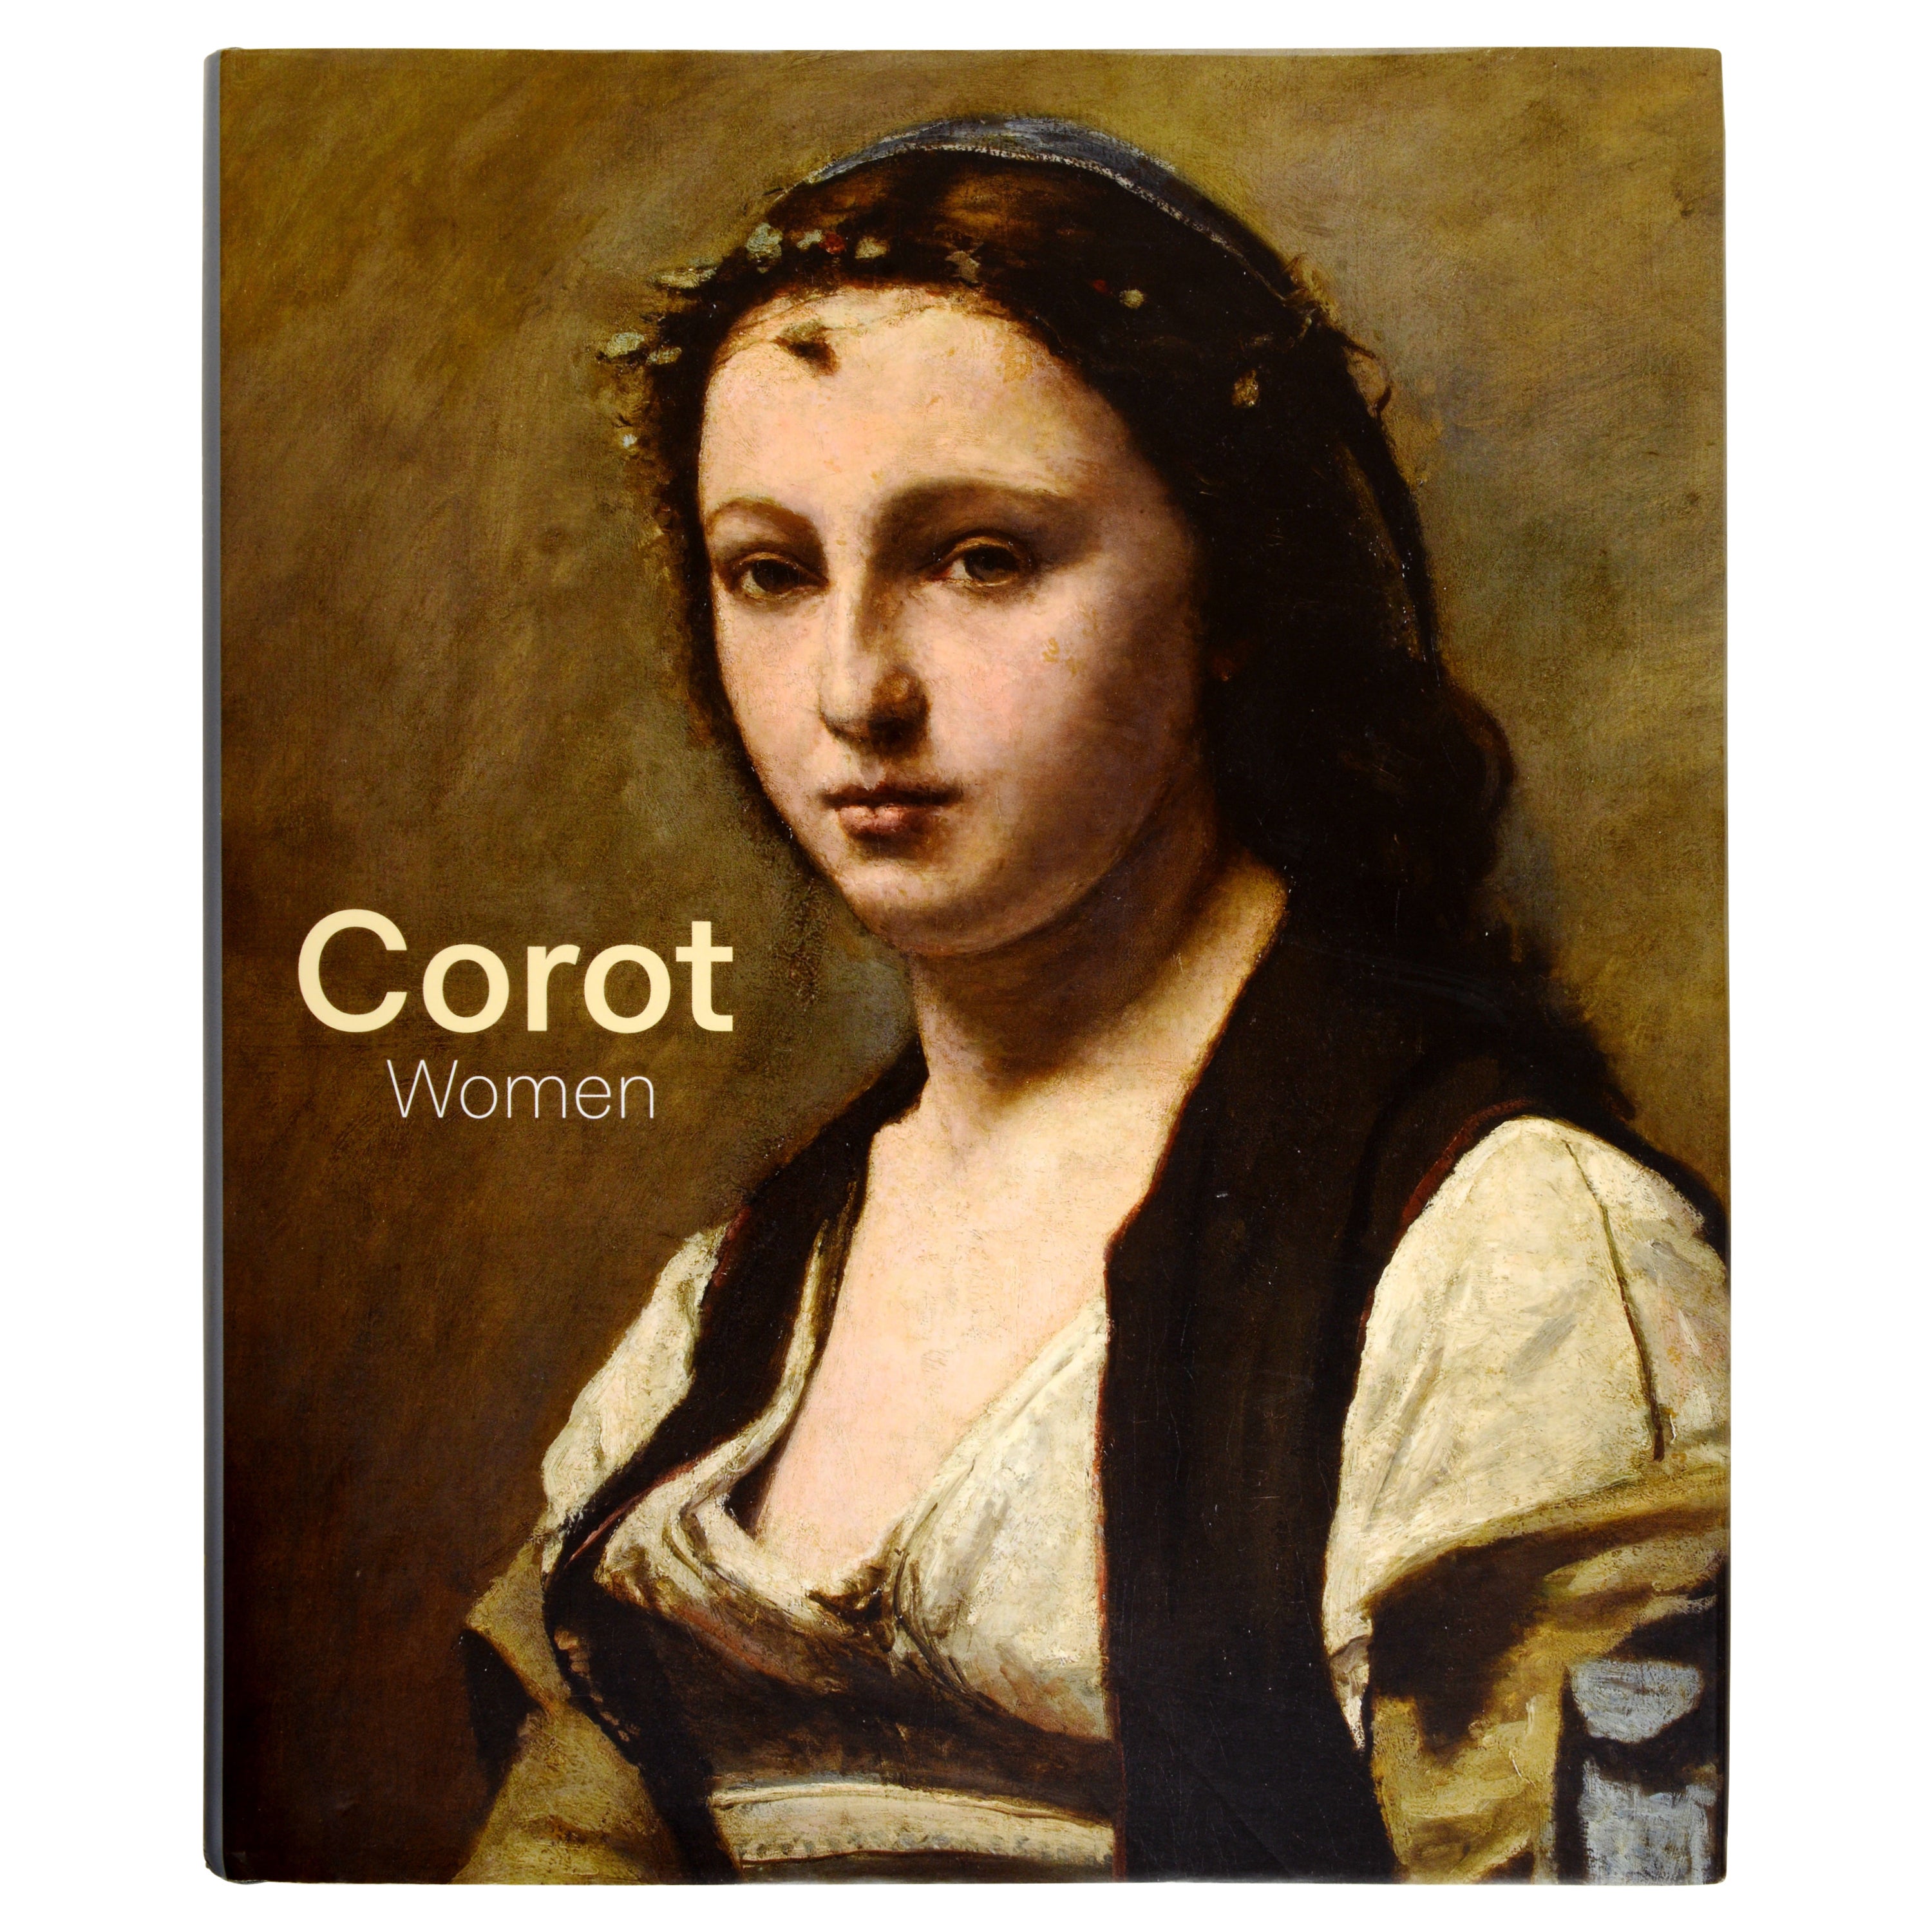 Corot Women by Mary Morton, 1st Ed